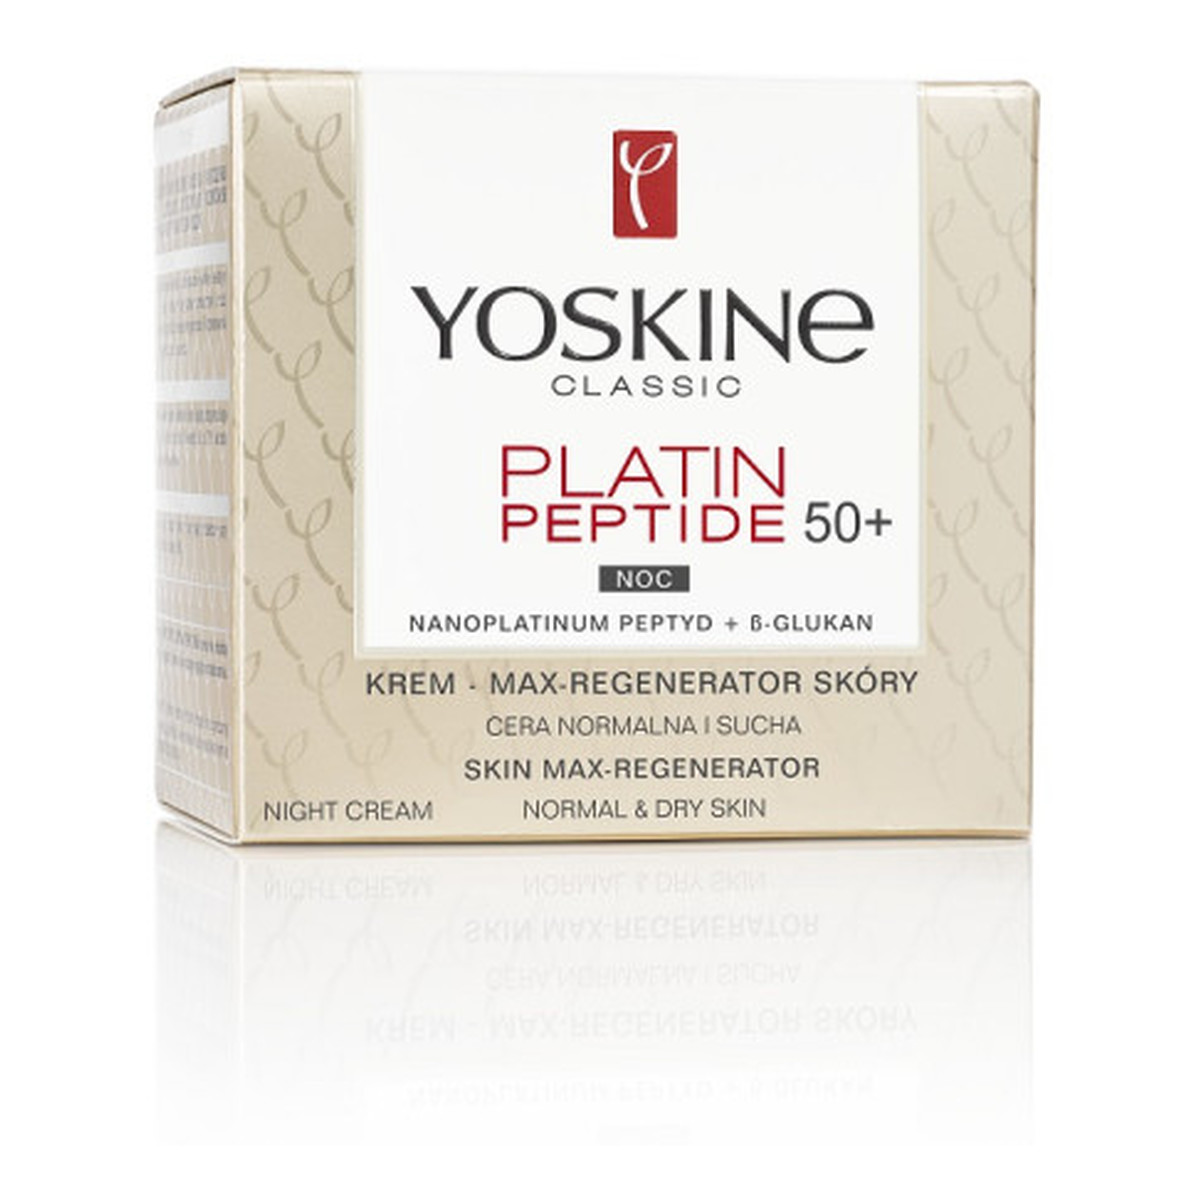 Yoskine Classic Platin Peptide 50+ krem max-regenerator skóry do cery normalnej i suchej na noc 50ml